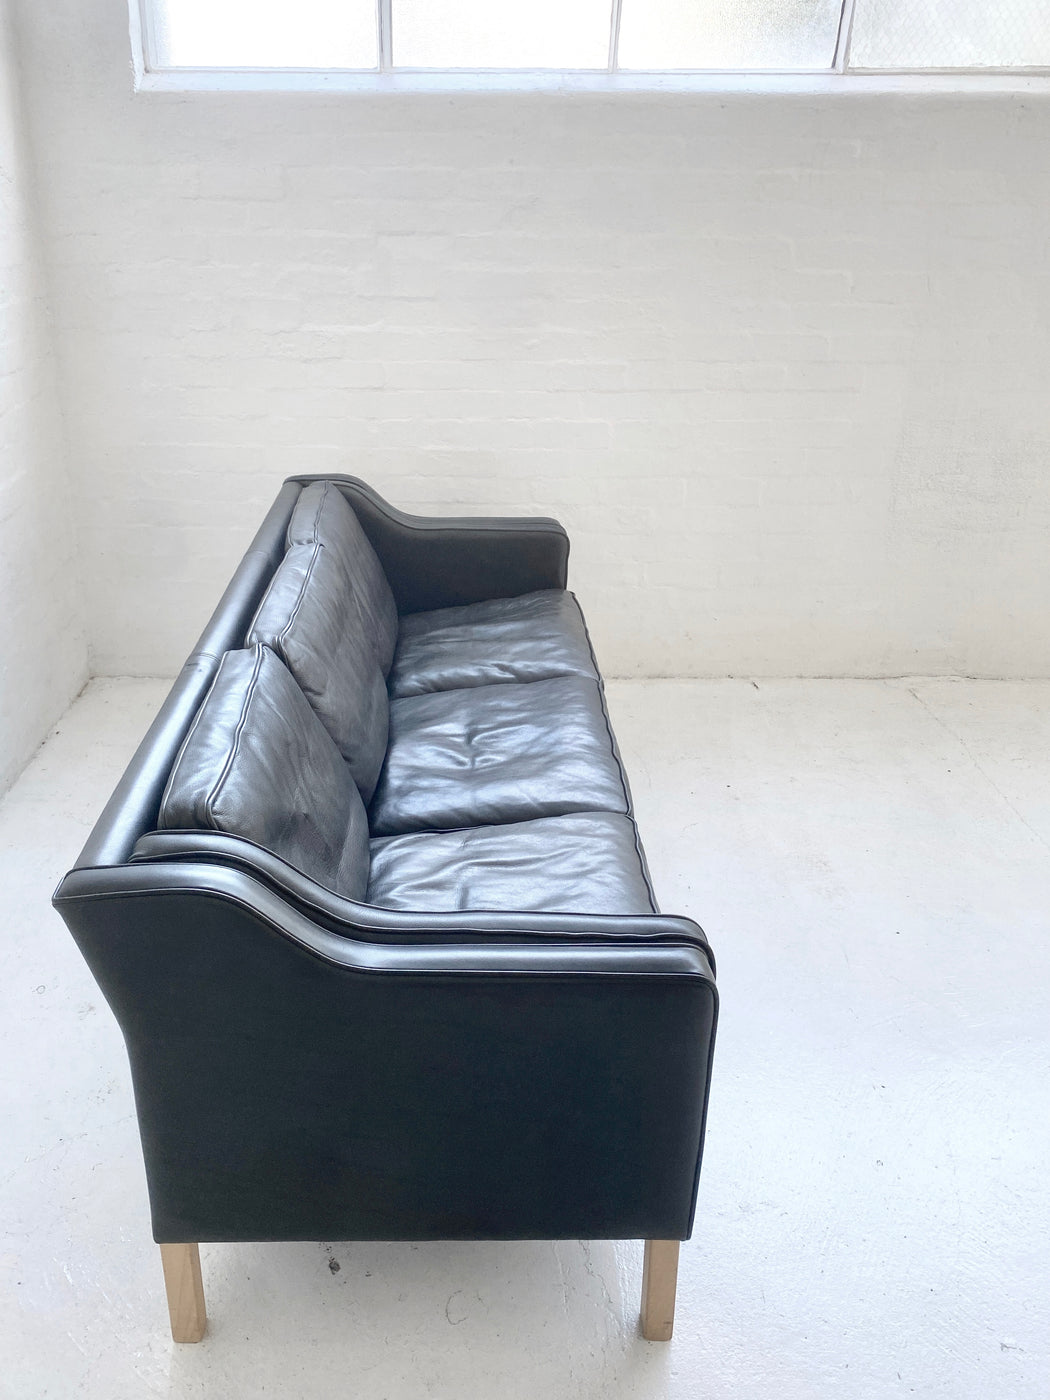 Mogens Hansen Leather Sofa